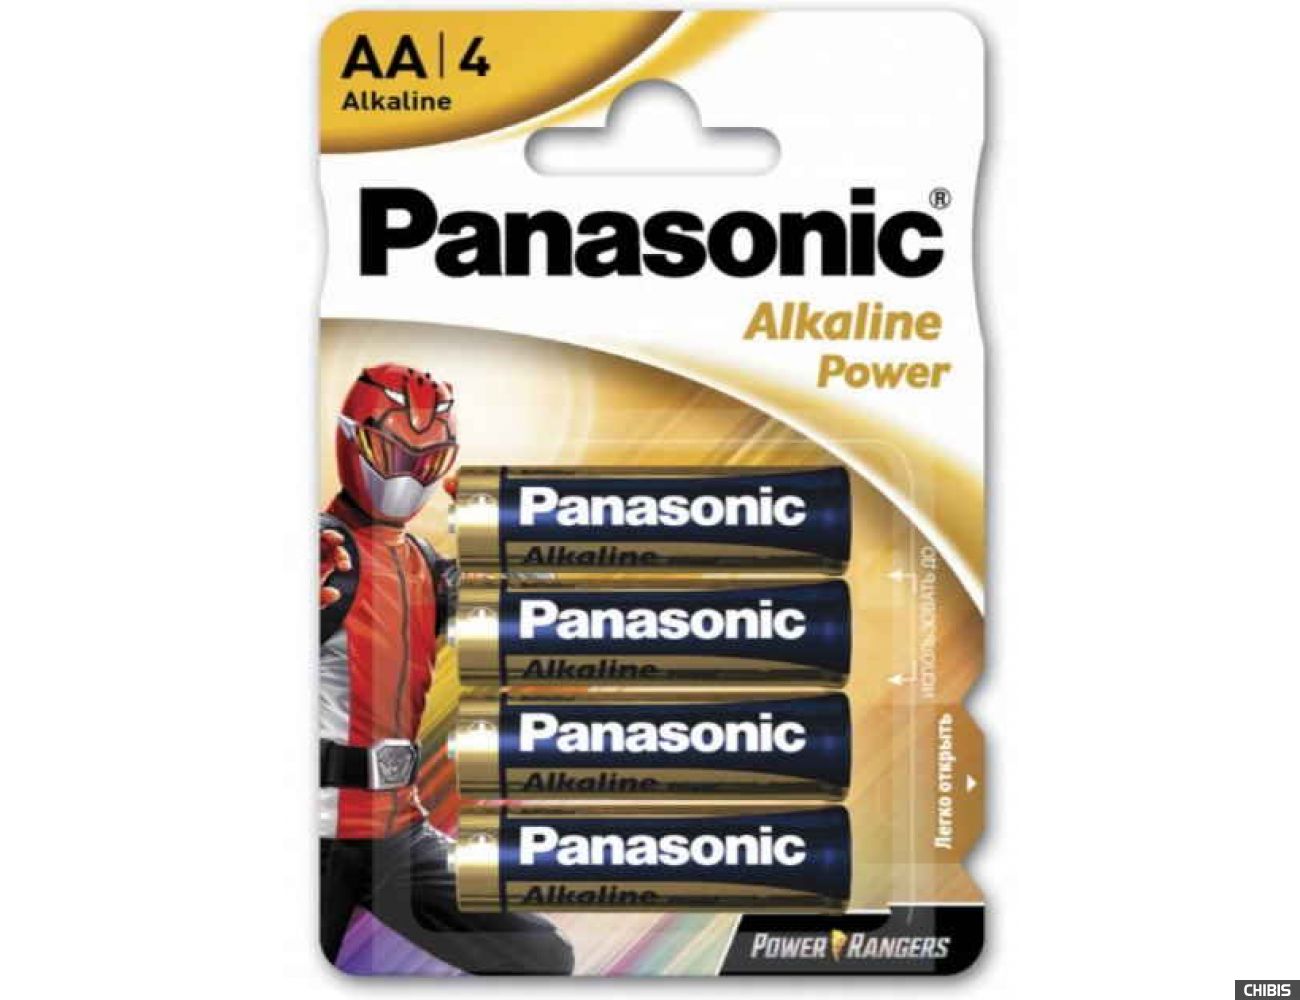 Батарейка Panasonic Alkaline Power LR06 1.5V Ragers блистер 4 шт.